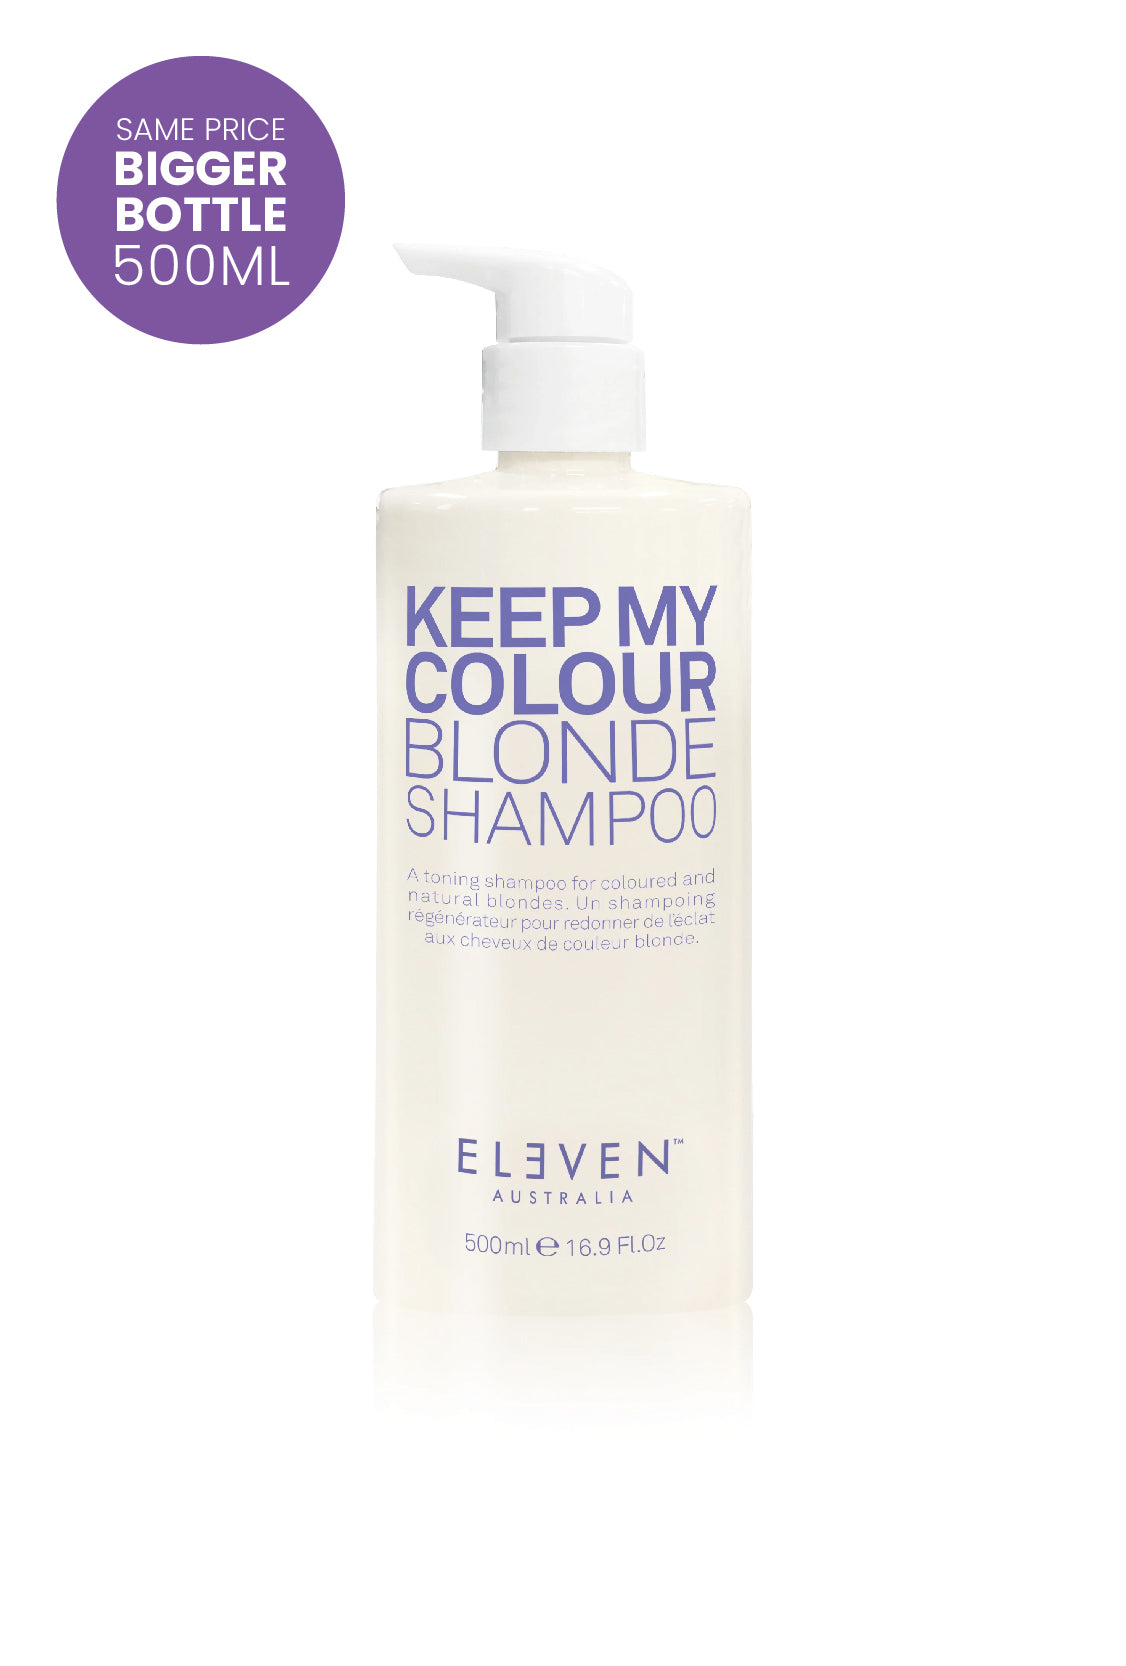 Limited Edition 500ml - Keep My Blonde Shampoo - ELEVEN Australia